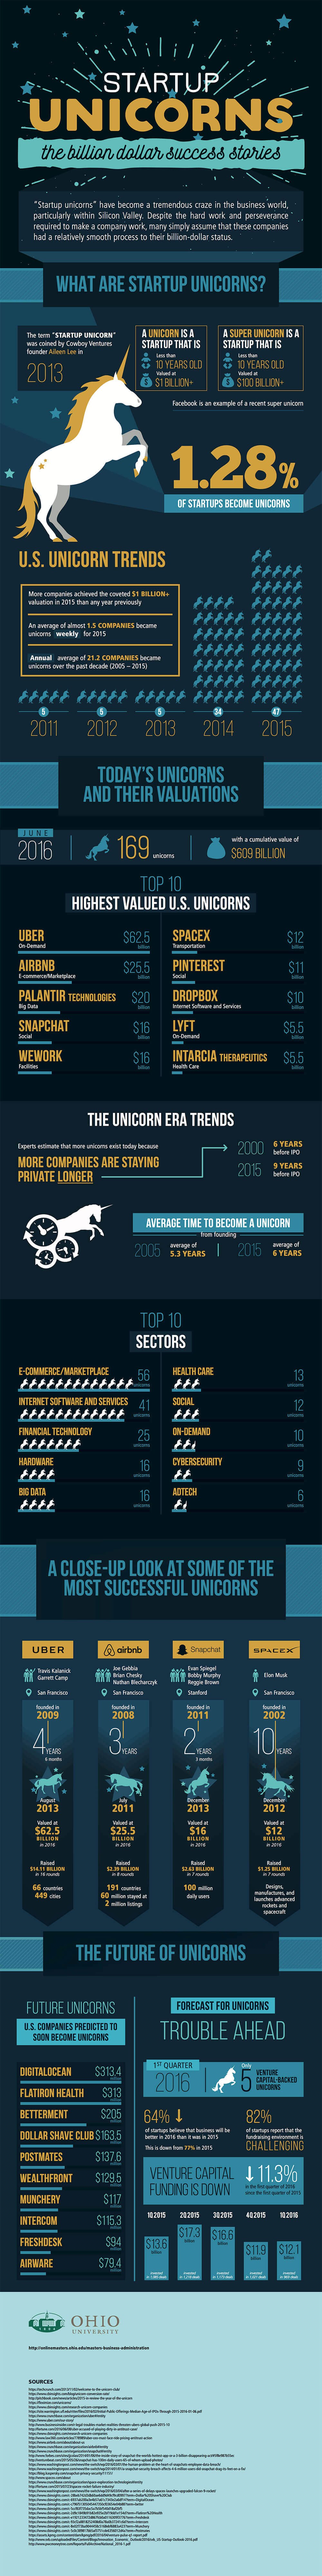 StartUp Unicorn The Billion Dollar Success Stories #infographic